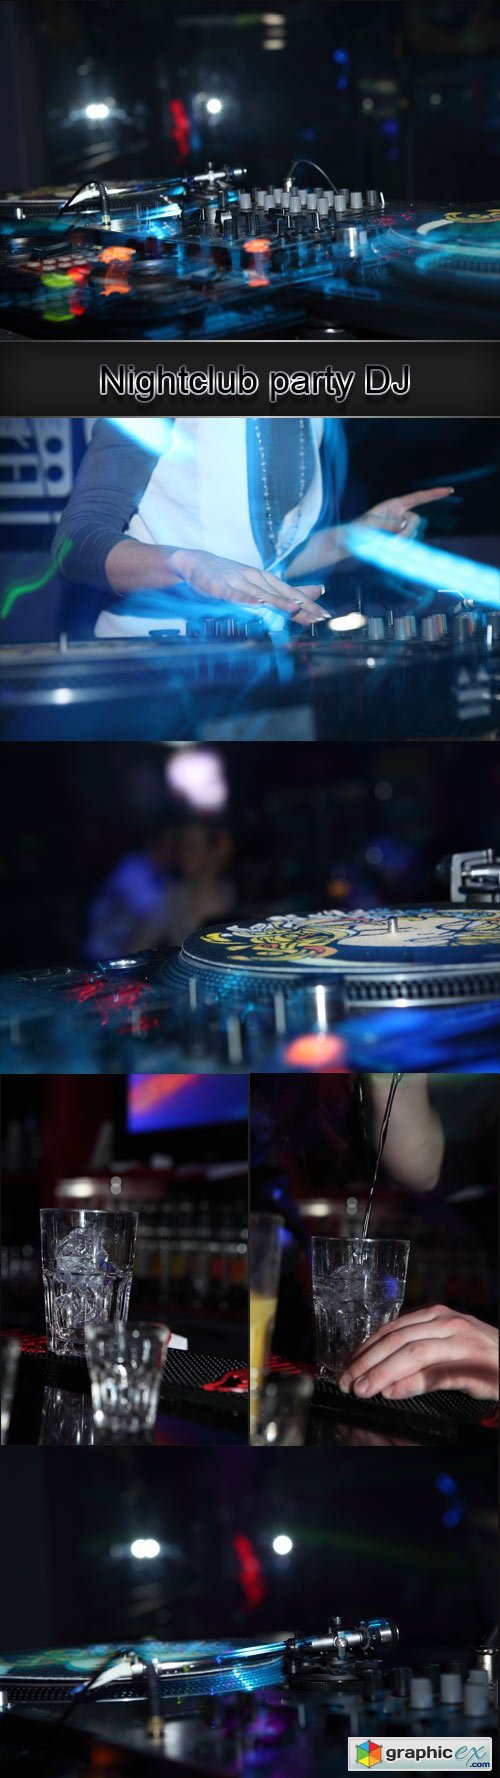 Nightclub party DJ